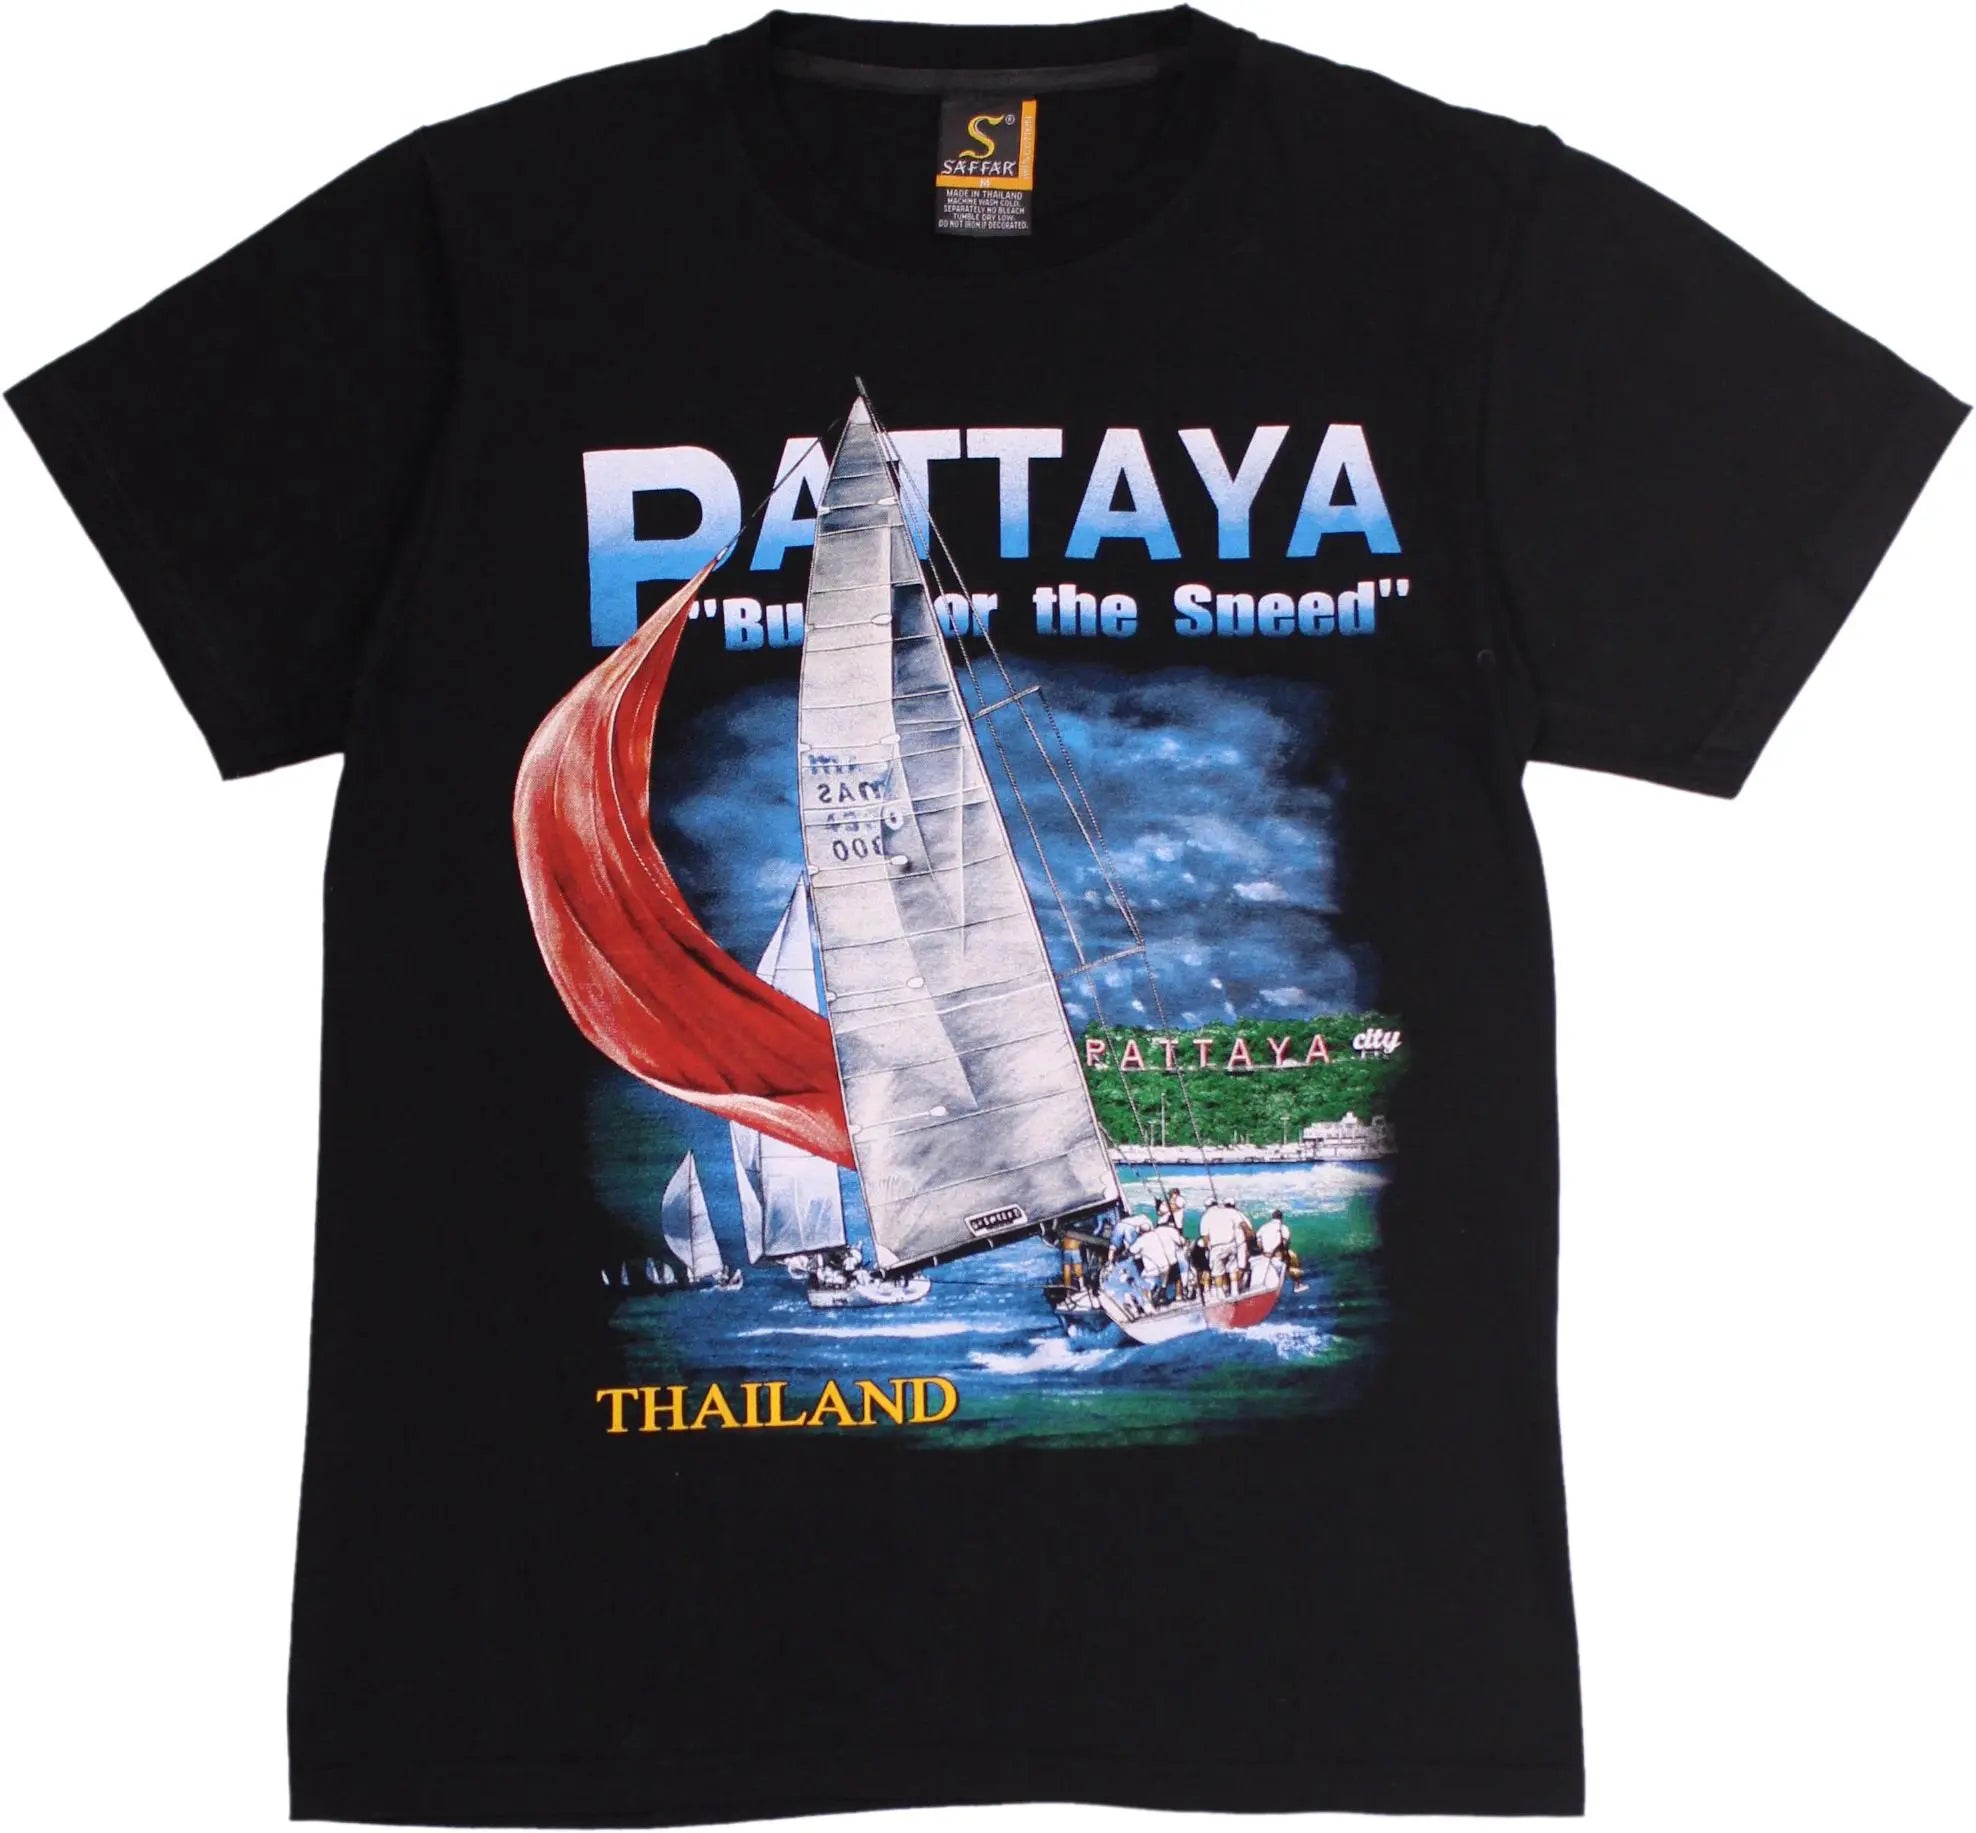 Saffar - Pattaya T-shirt- ThriftTale.com - Vintage and second handclothing